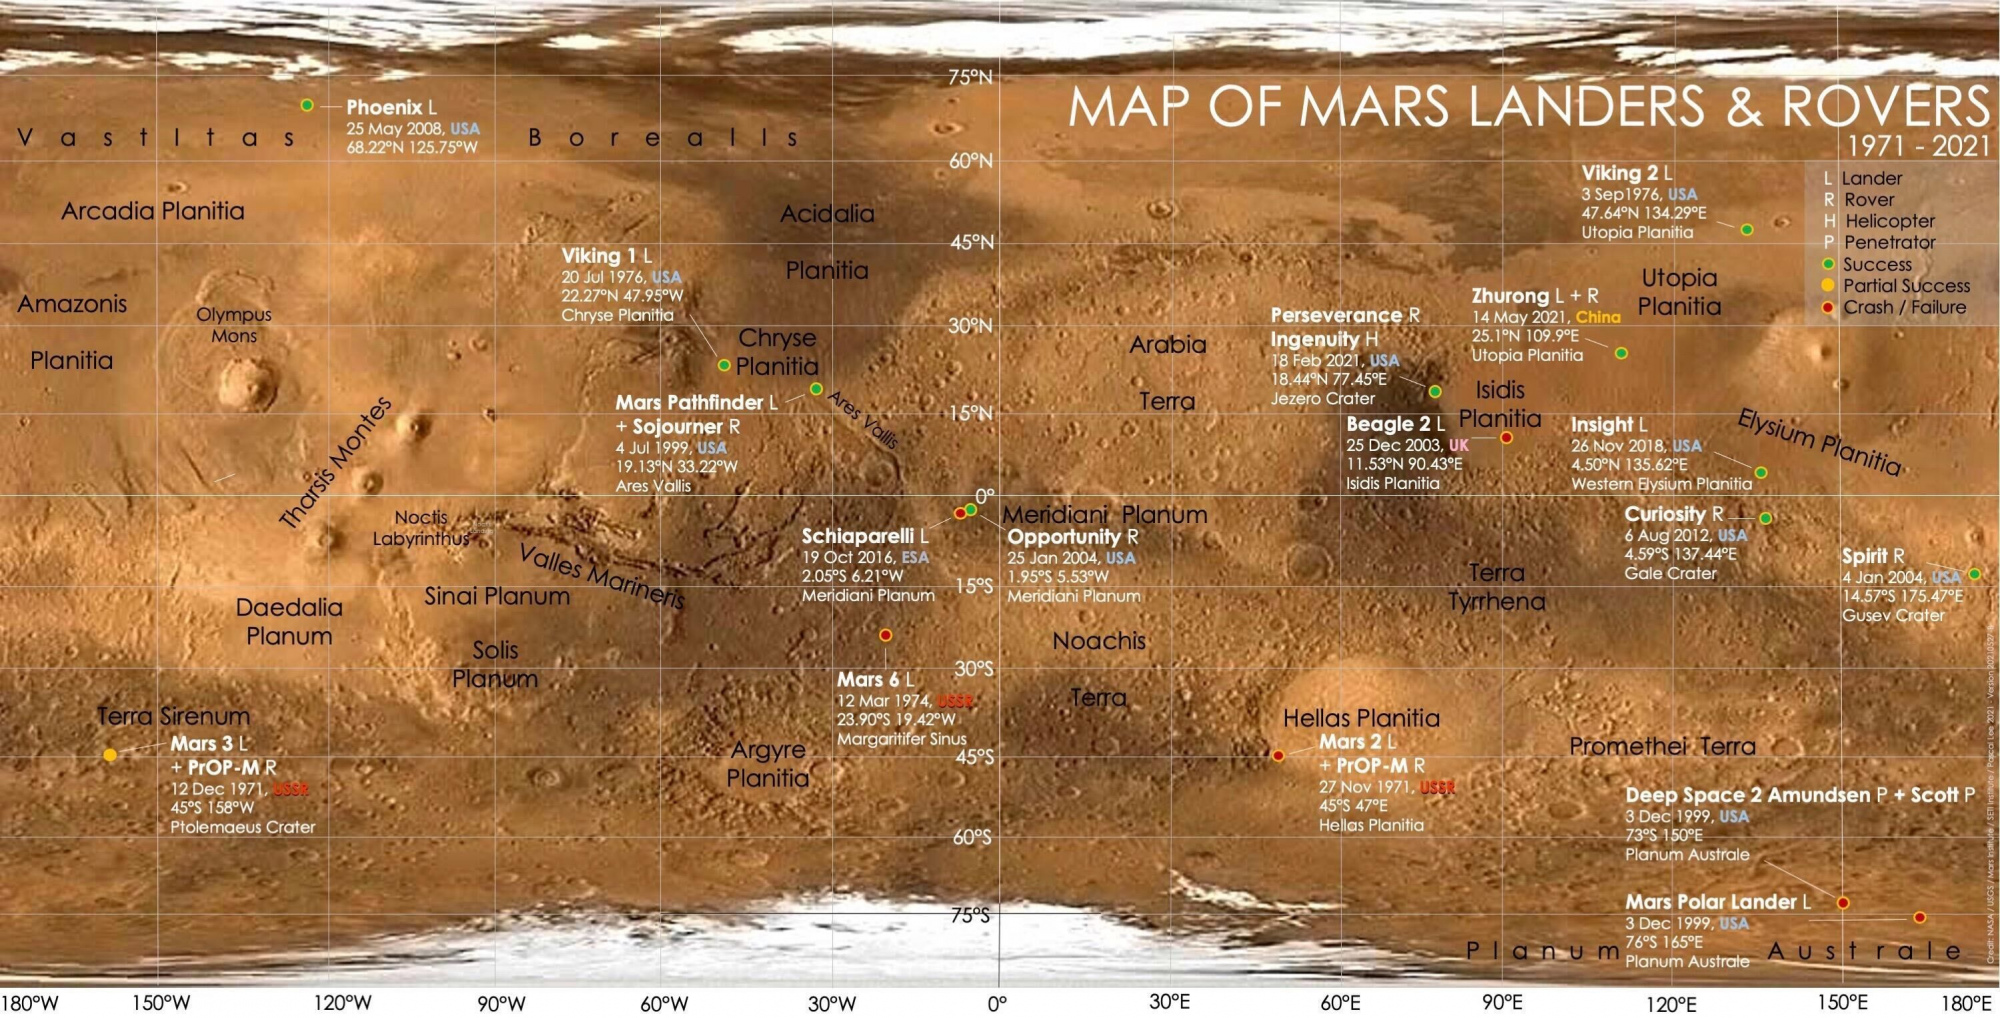 60b0d23e1df9e_Map-of-Mars-landersrovers_1971-2021_PascalLee.thumb.jpg.42bf4e8d138af945f839f5188160a11e.jpg